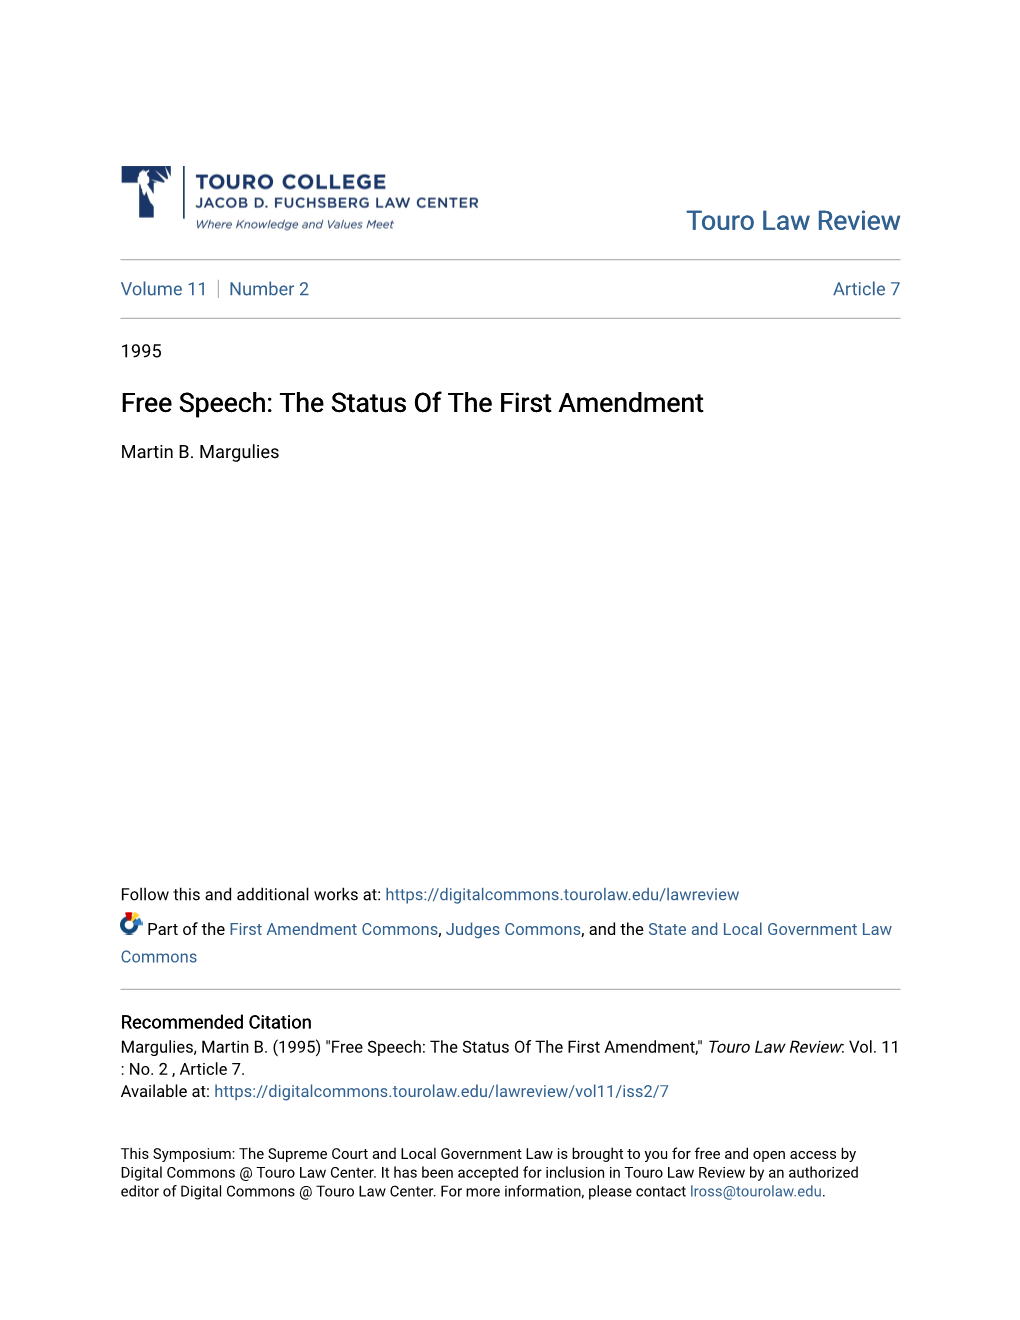 Free Speech: the Status of the First Amendment